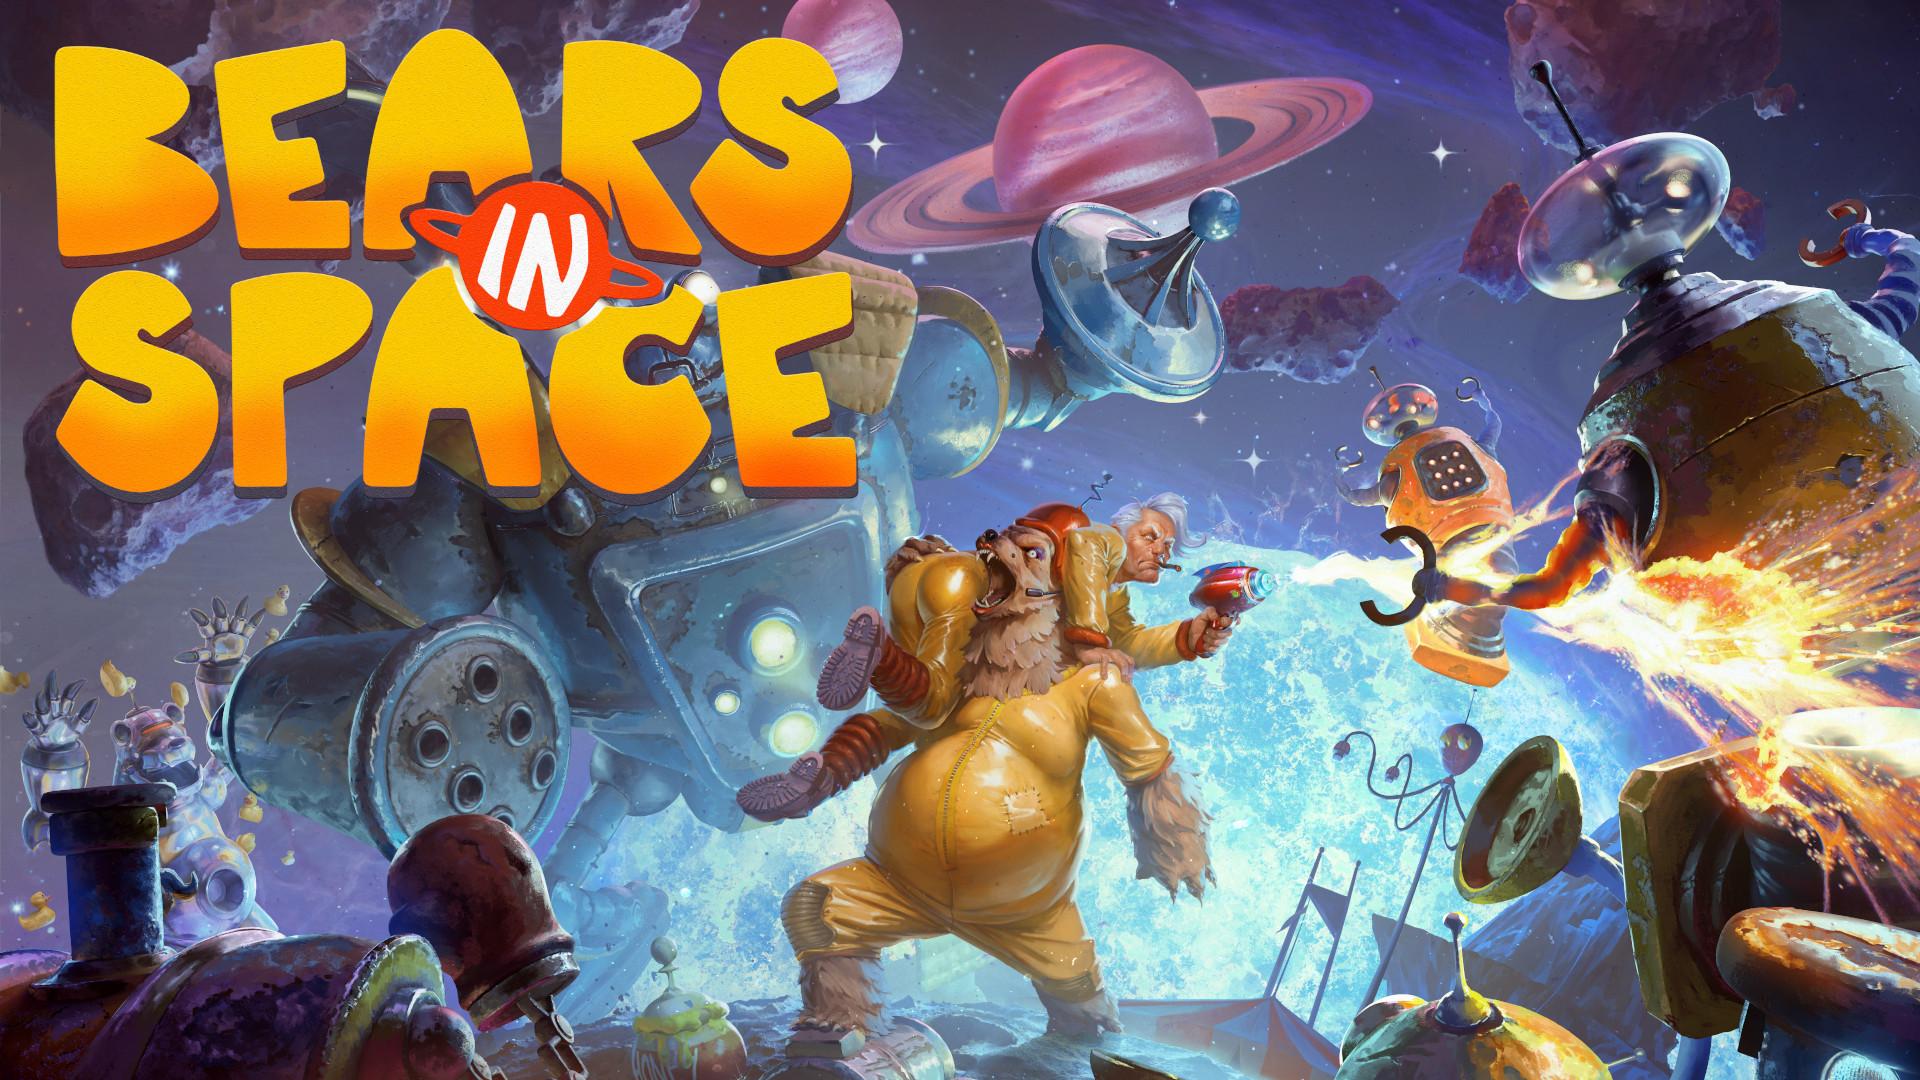 Bears in Space: Aventura Interplanetária Chega em Março!